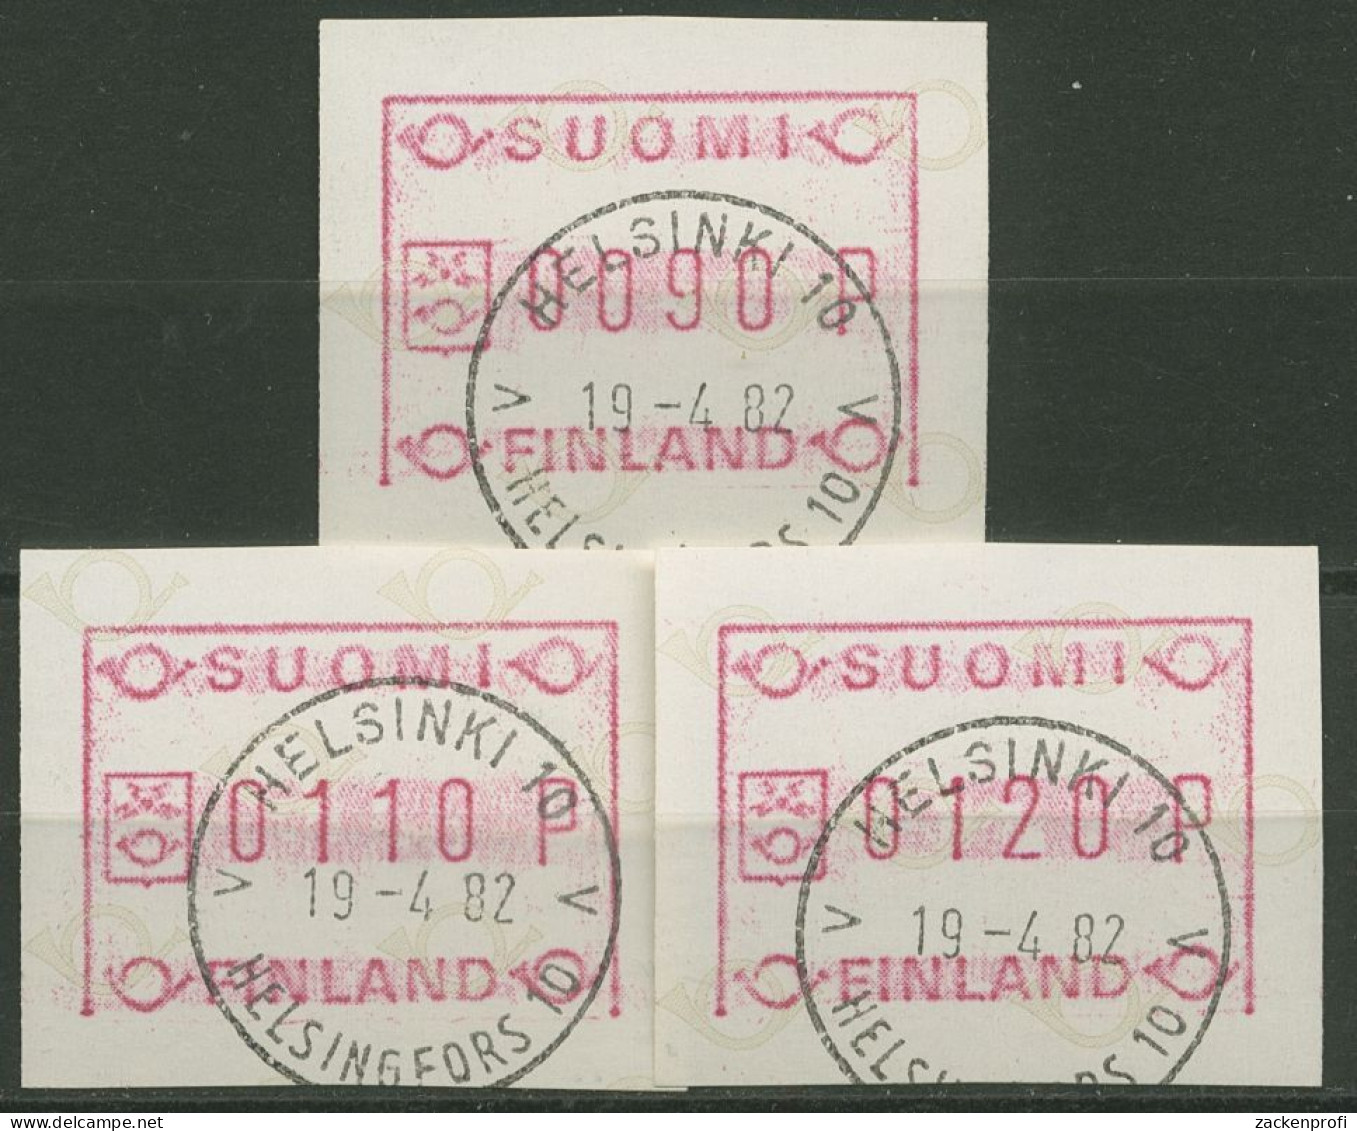 Finnland ATM 1982 Kl. Posthörner Grundlinie Fehlt Satz ATM 1.1 IV S 1 Gestempelt - Timbres De Distributeurs [ATM]